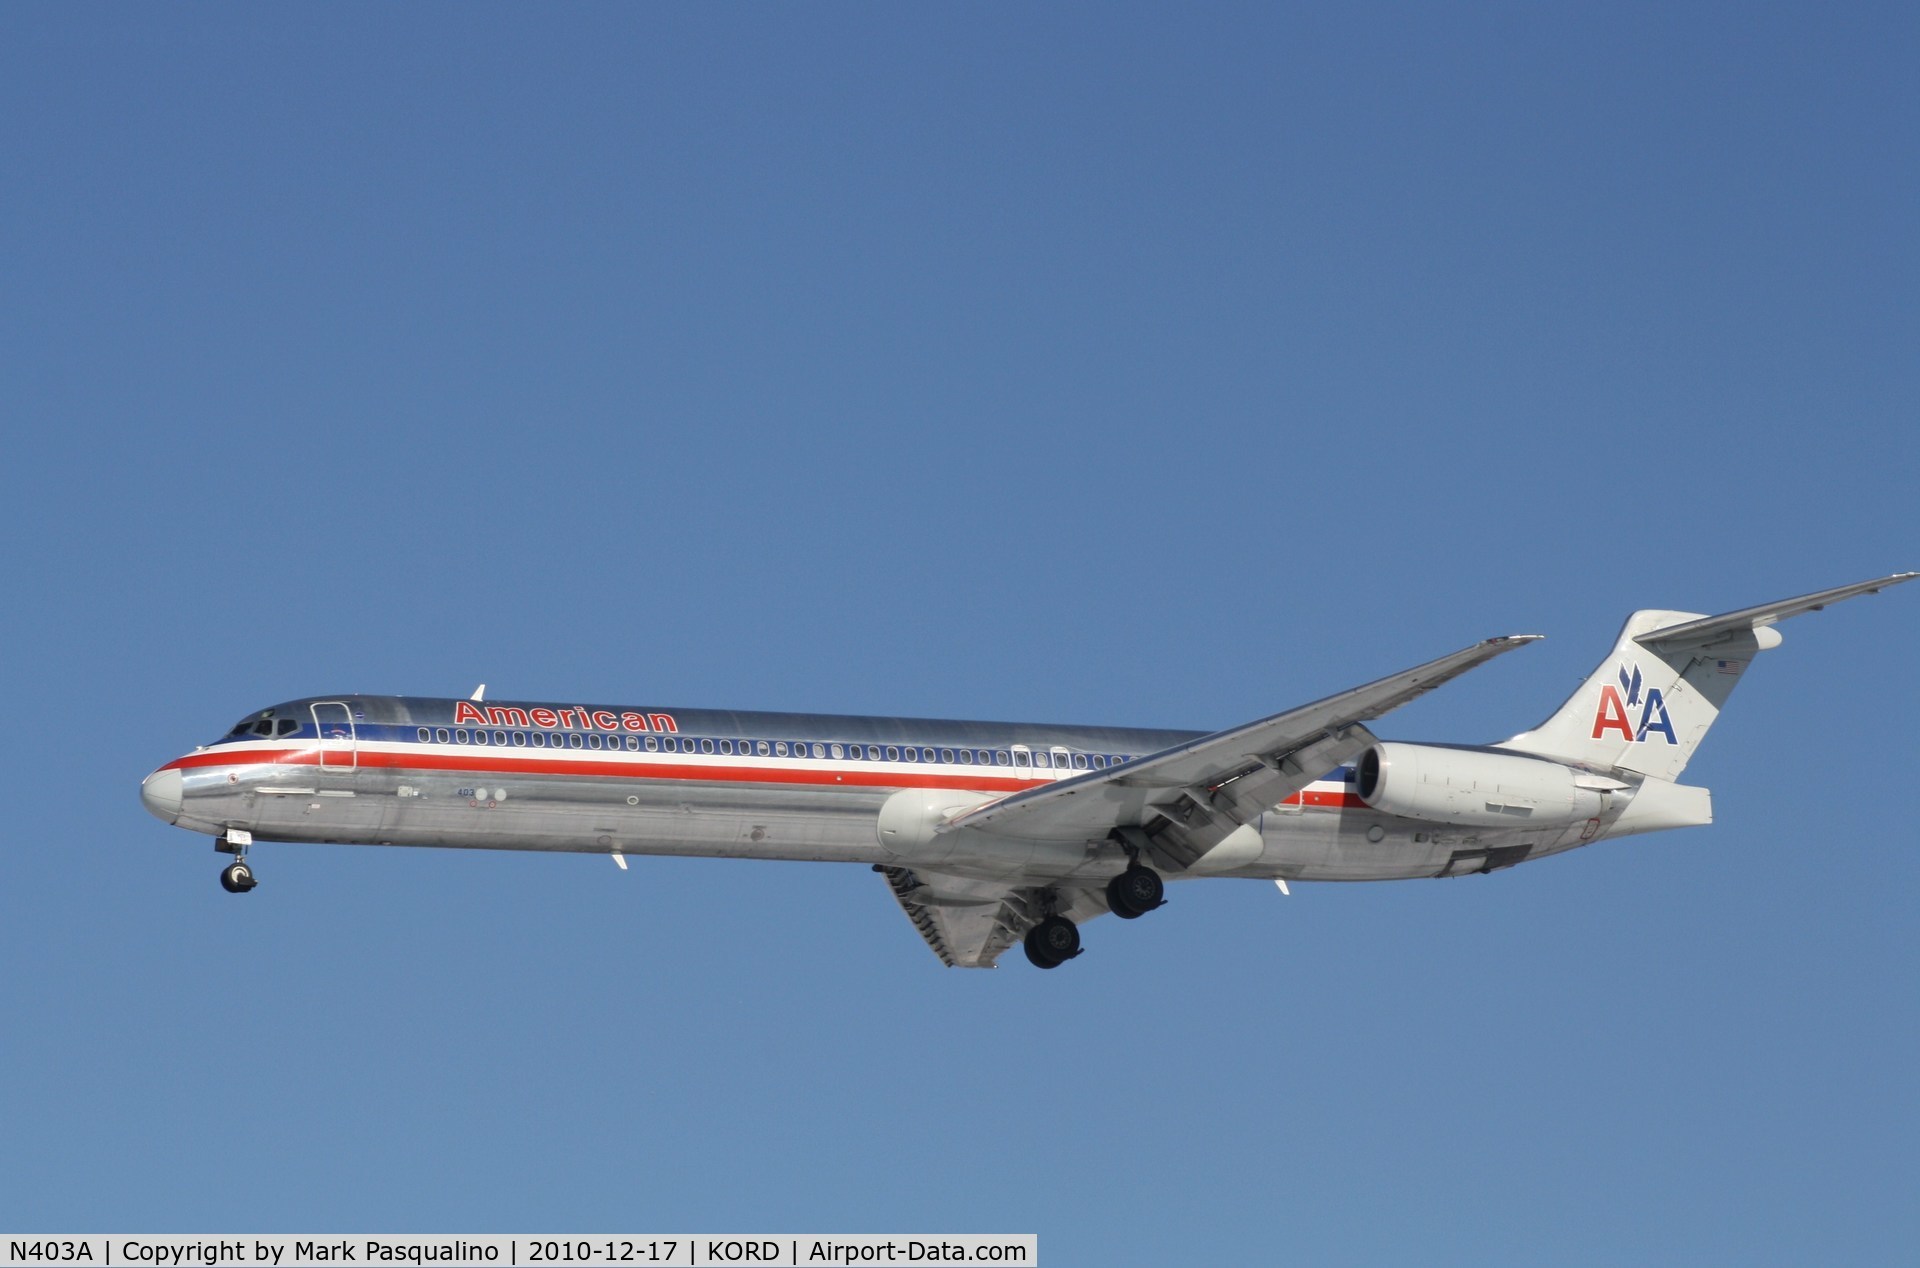 N403A, 1986 McDonnell Douglas MD-82 (DC-9-82) C/N 49314, MD-82